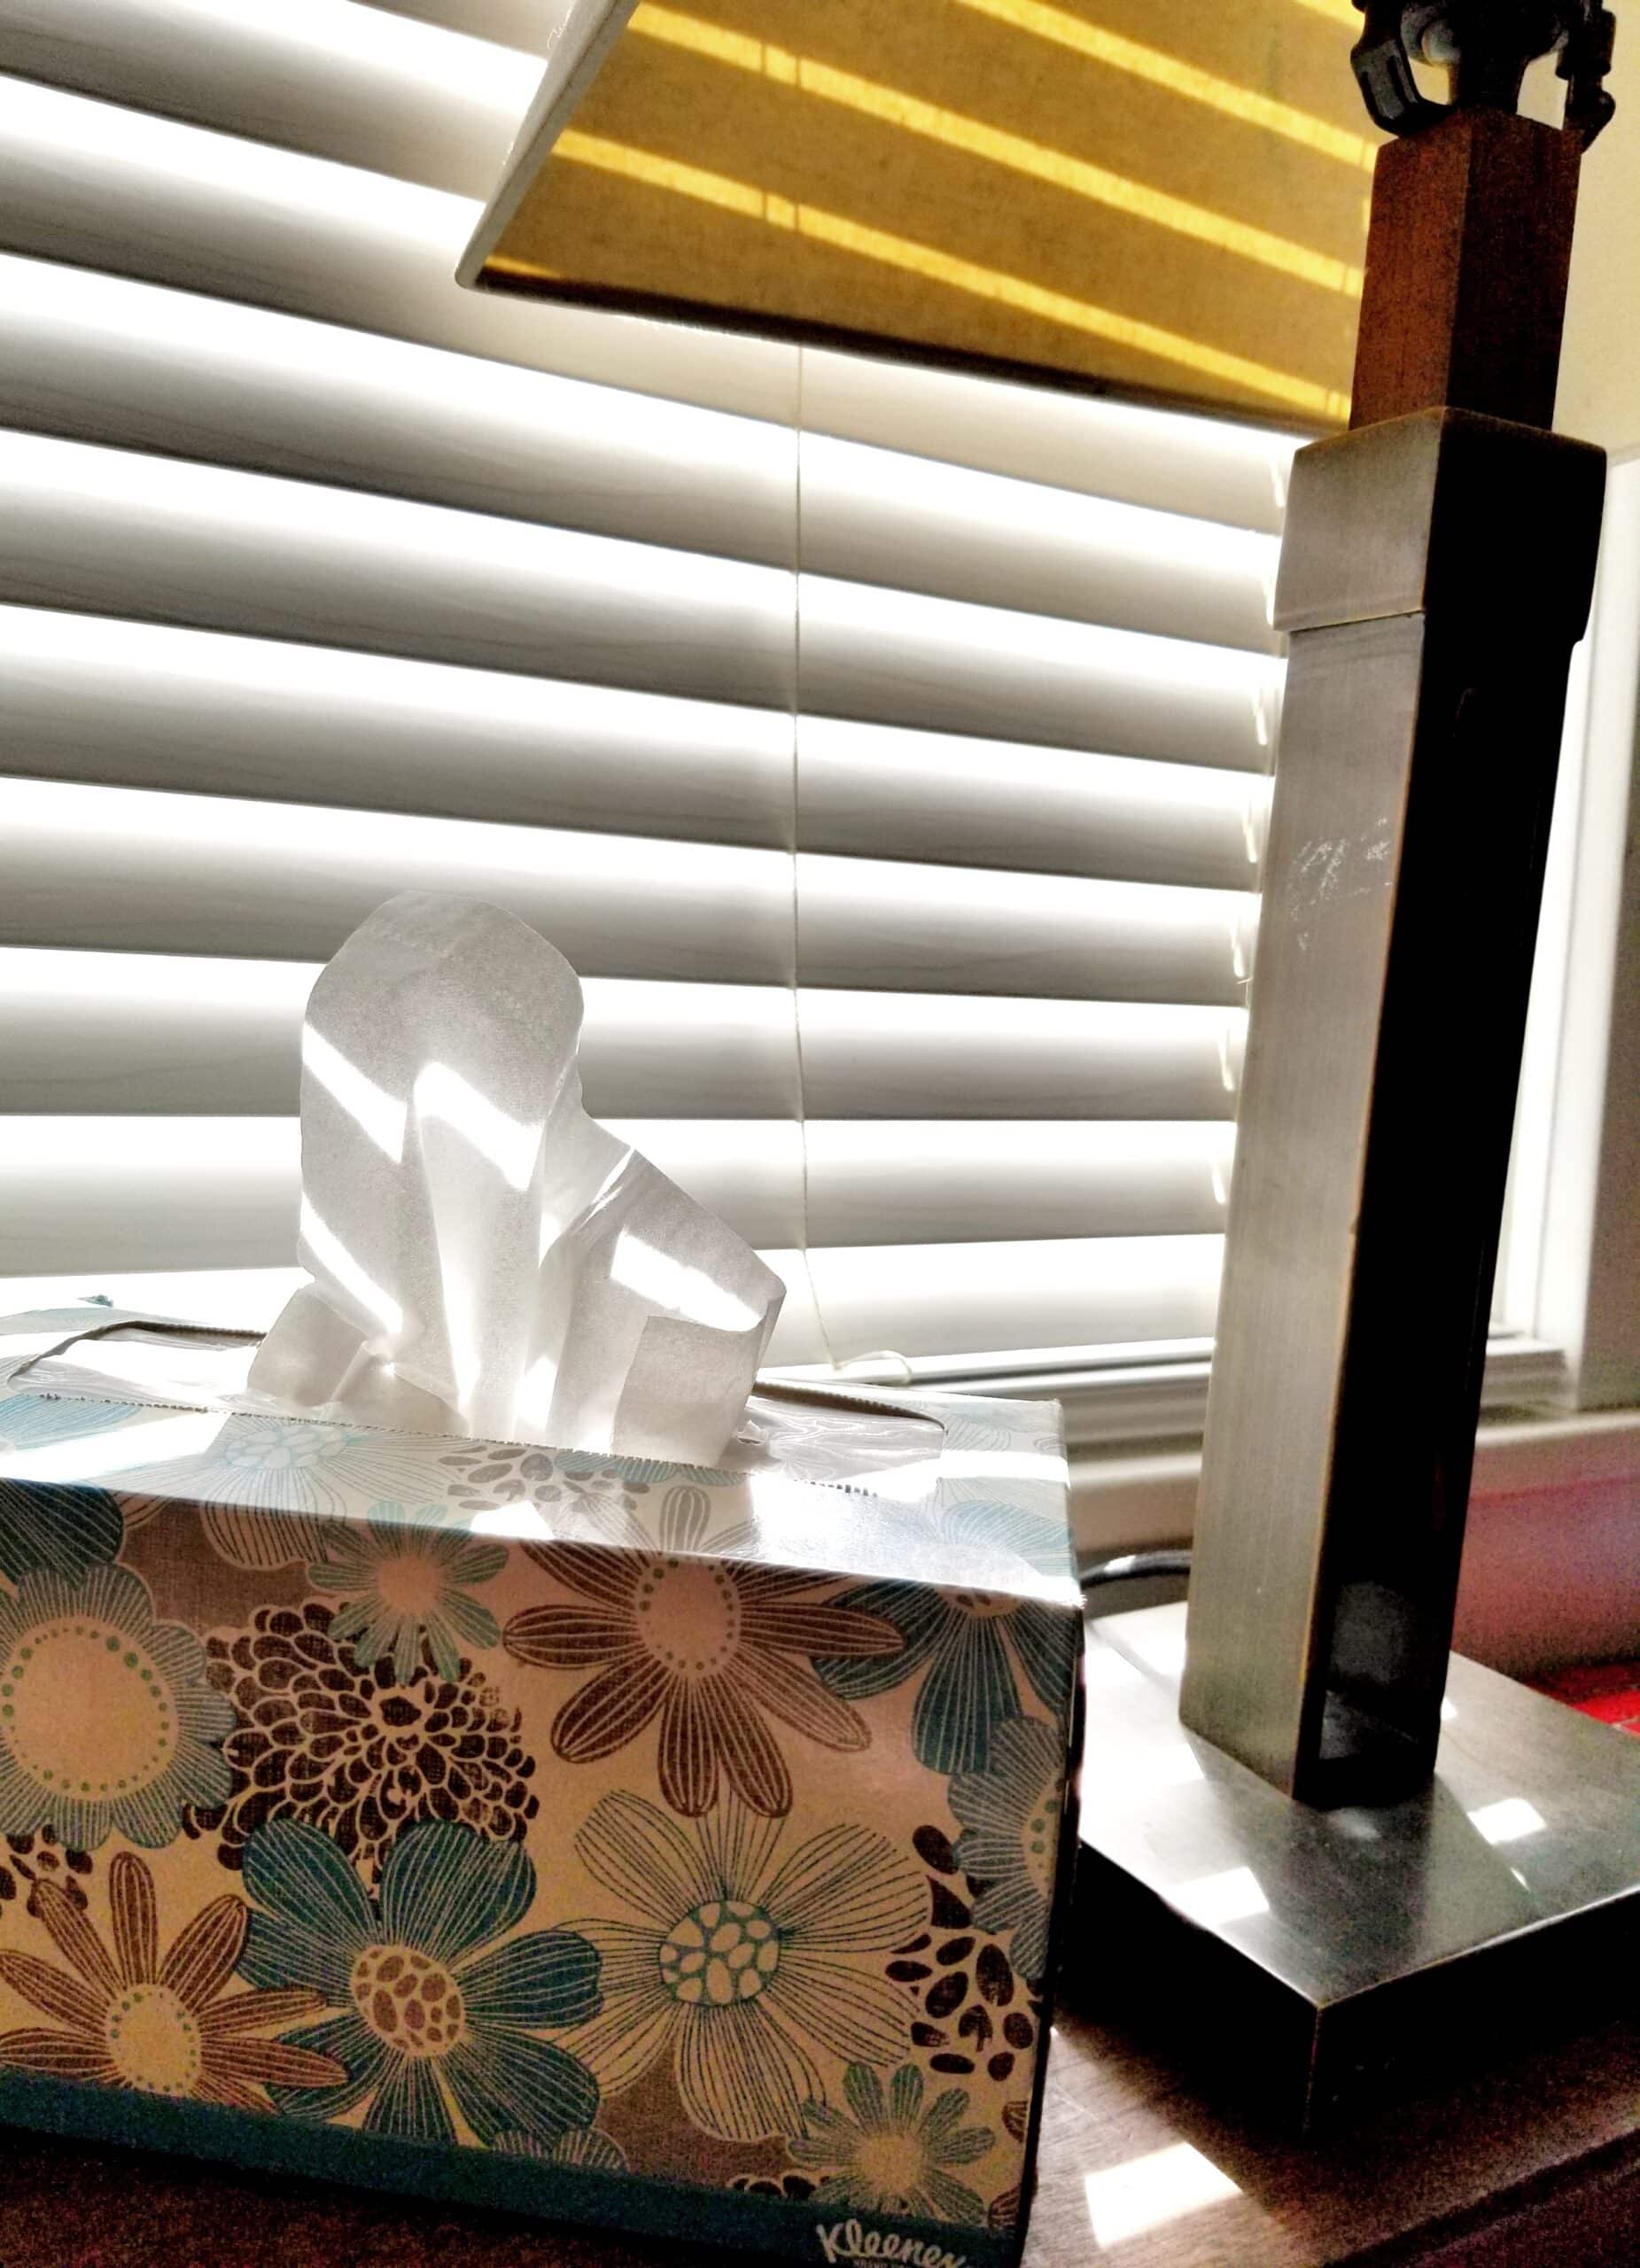 Tissue box near window